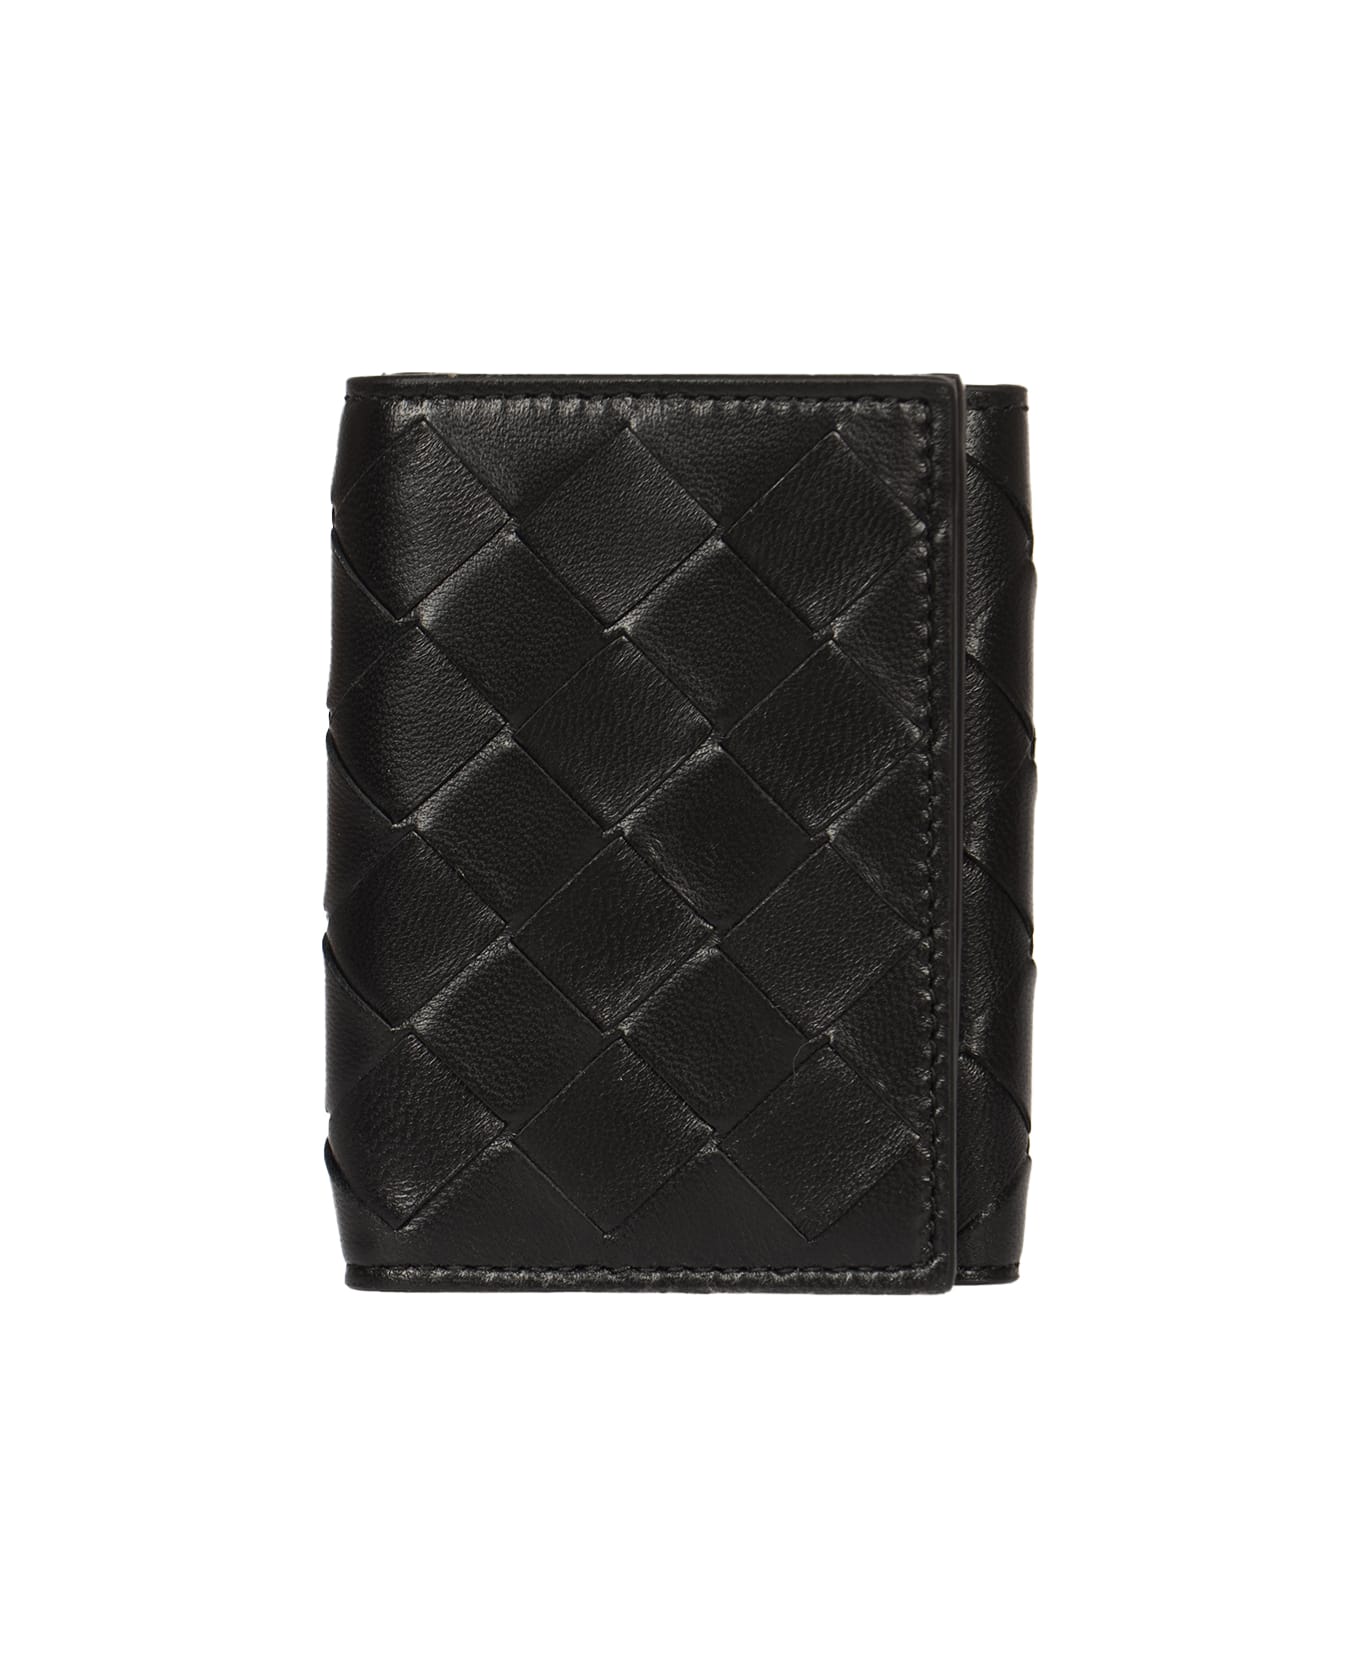 Bottega Veneta Weave Trifold Wallet - Black/Silver